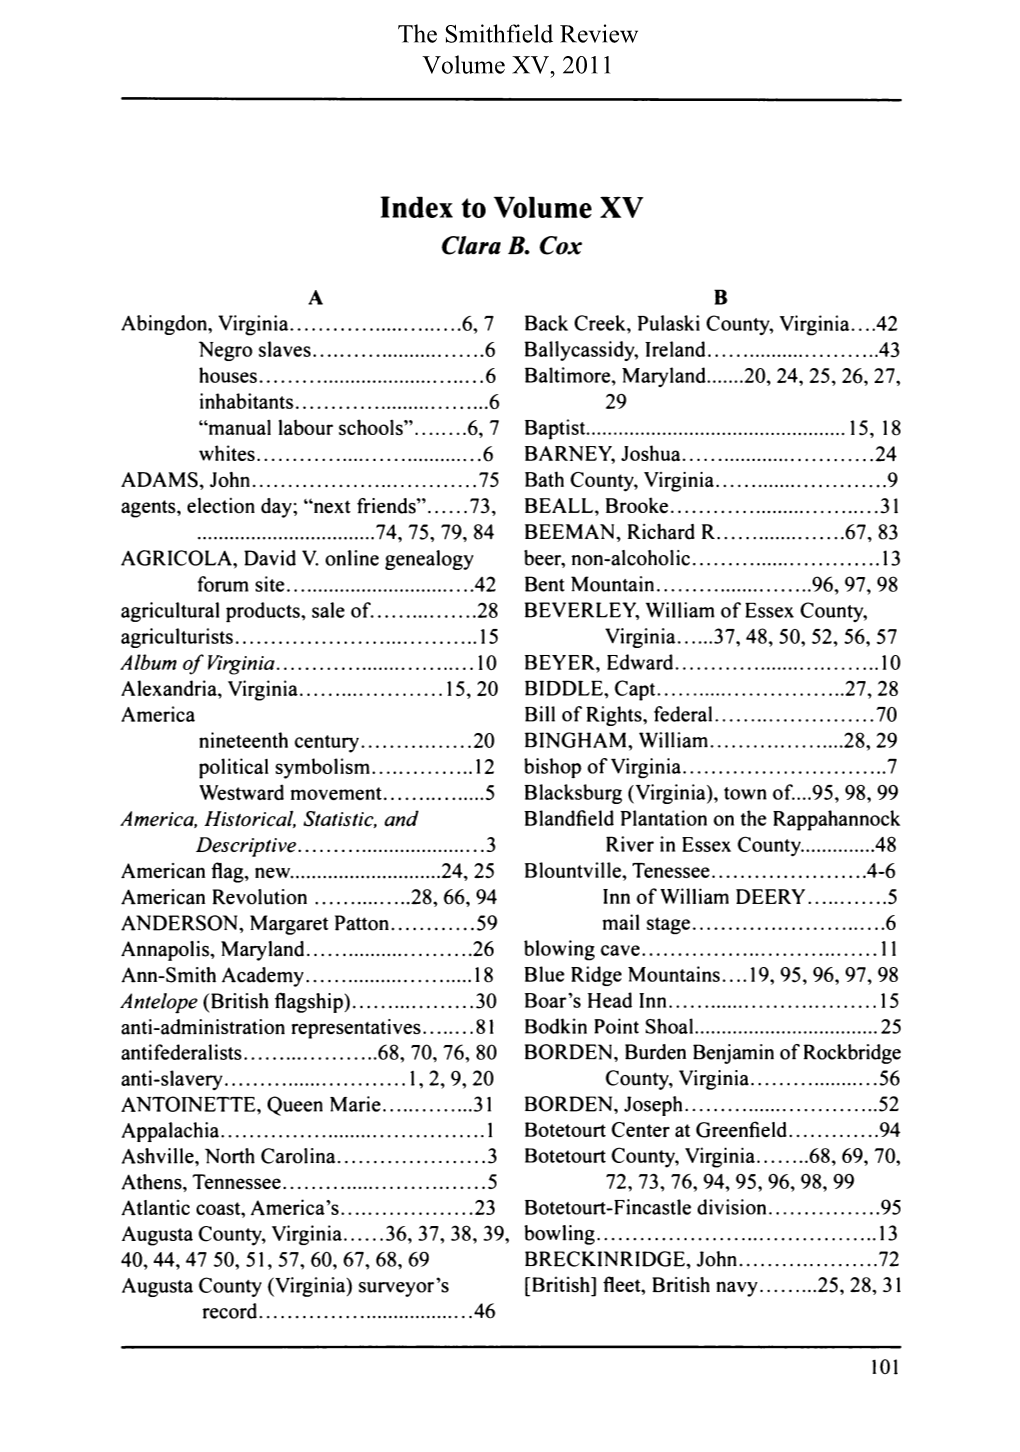 The Smithfield Review, Volume XV, 2011 Index